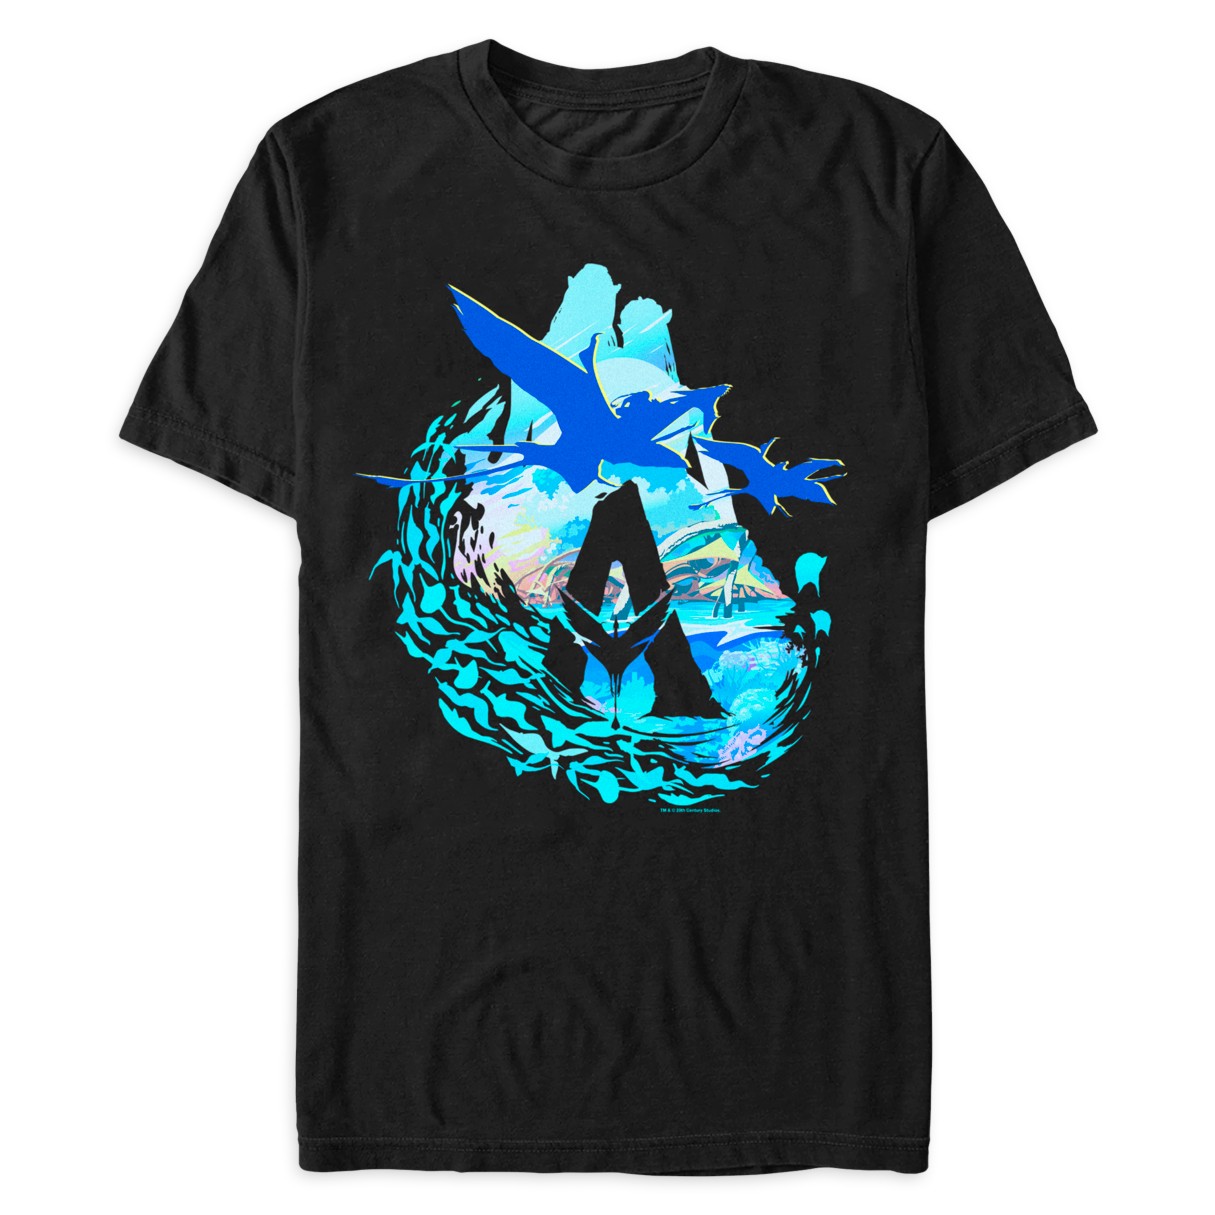 Jake Sully and Neytiri T-shirt – Avatar: The Way of Water